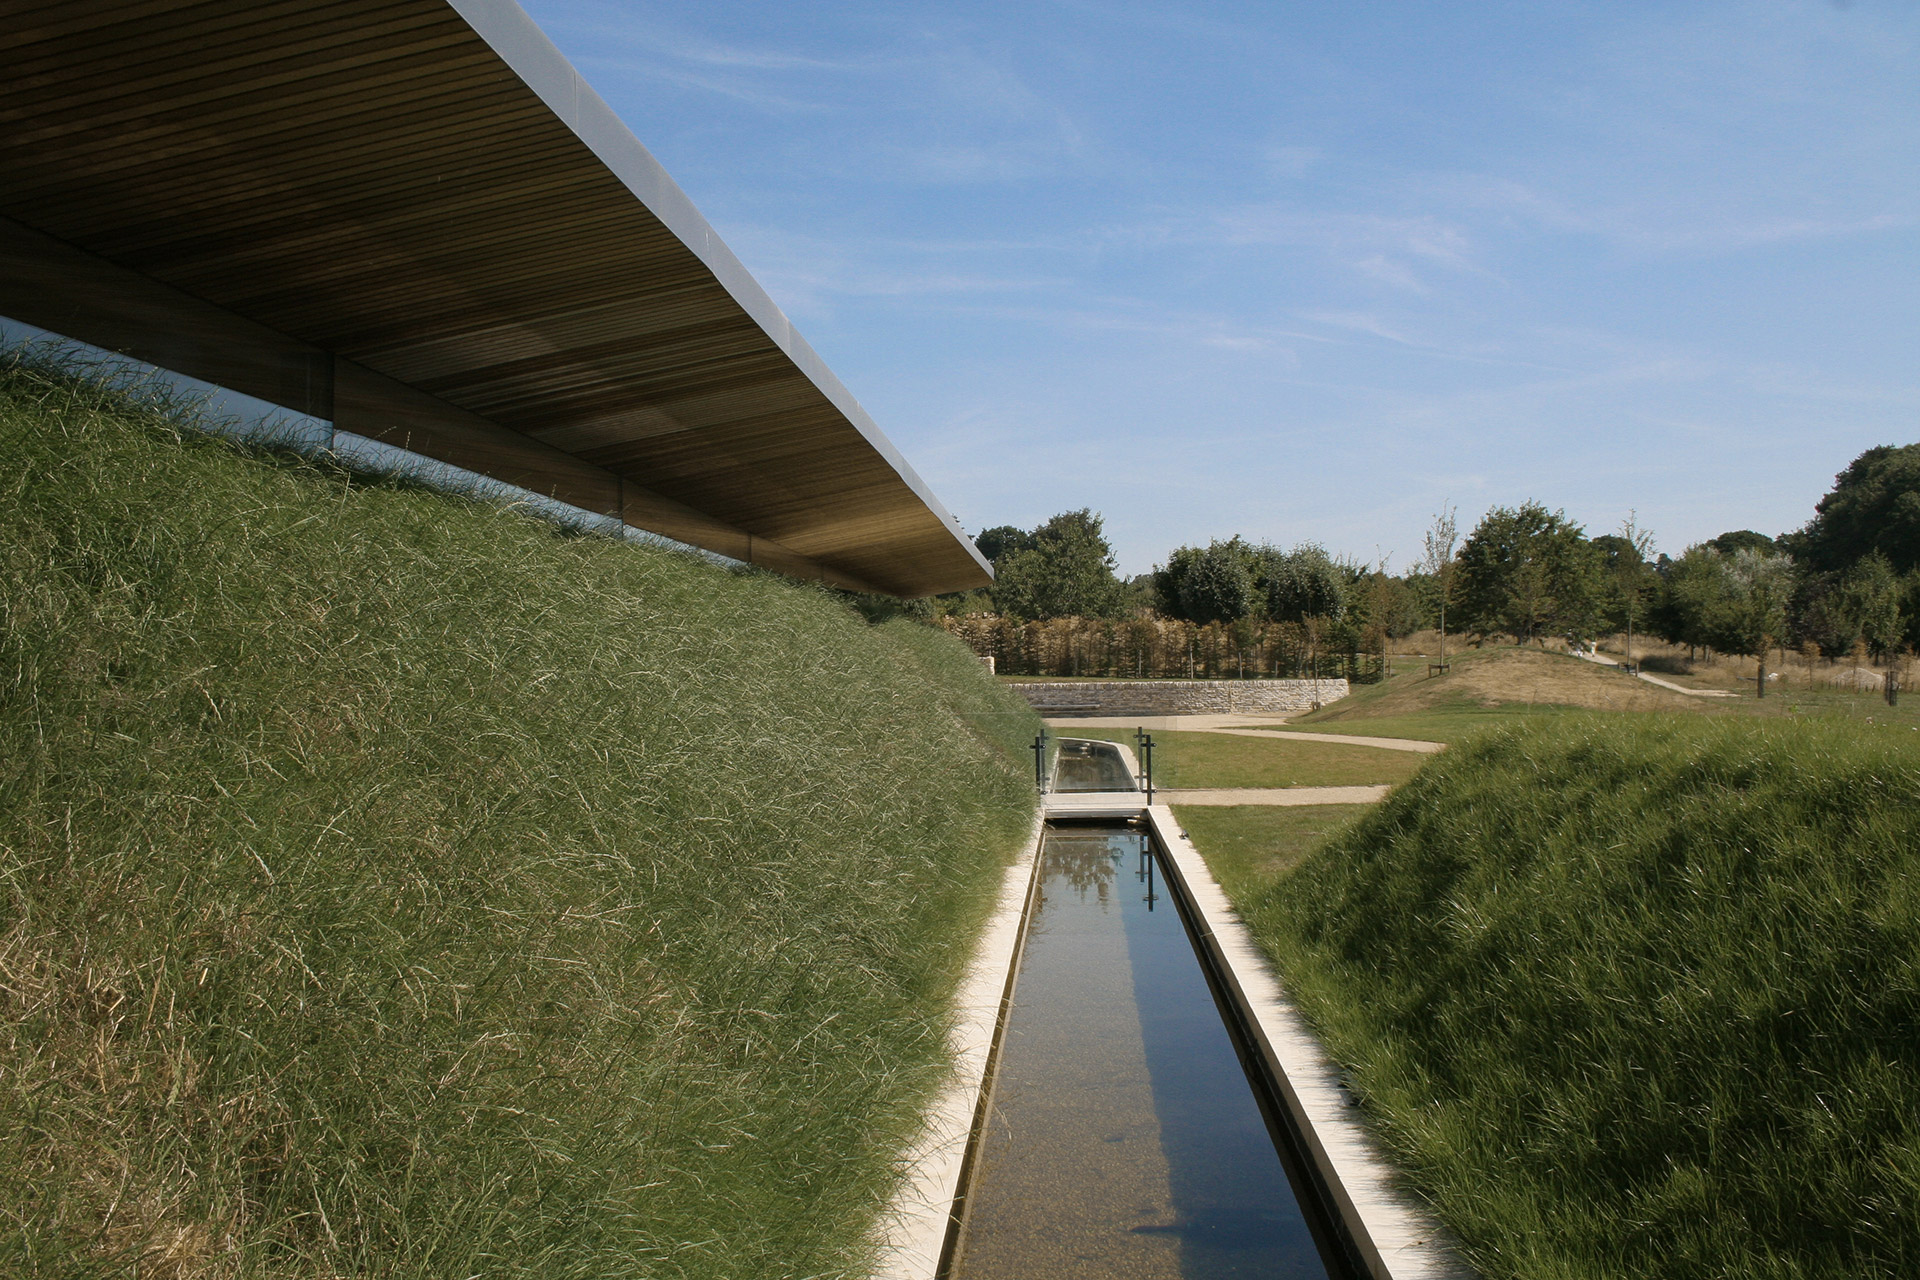 Moat around crematorium with walkway over water